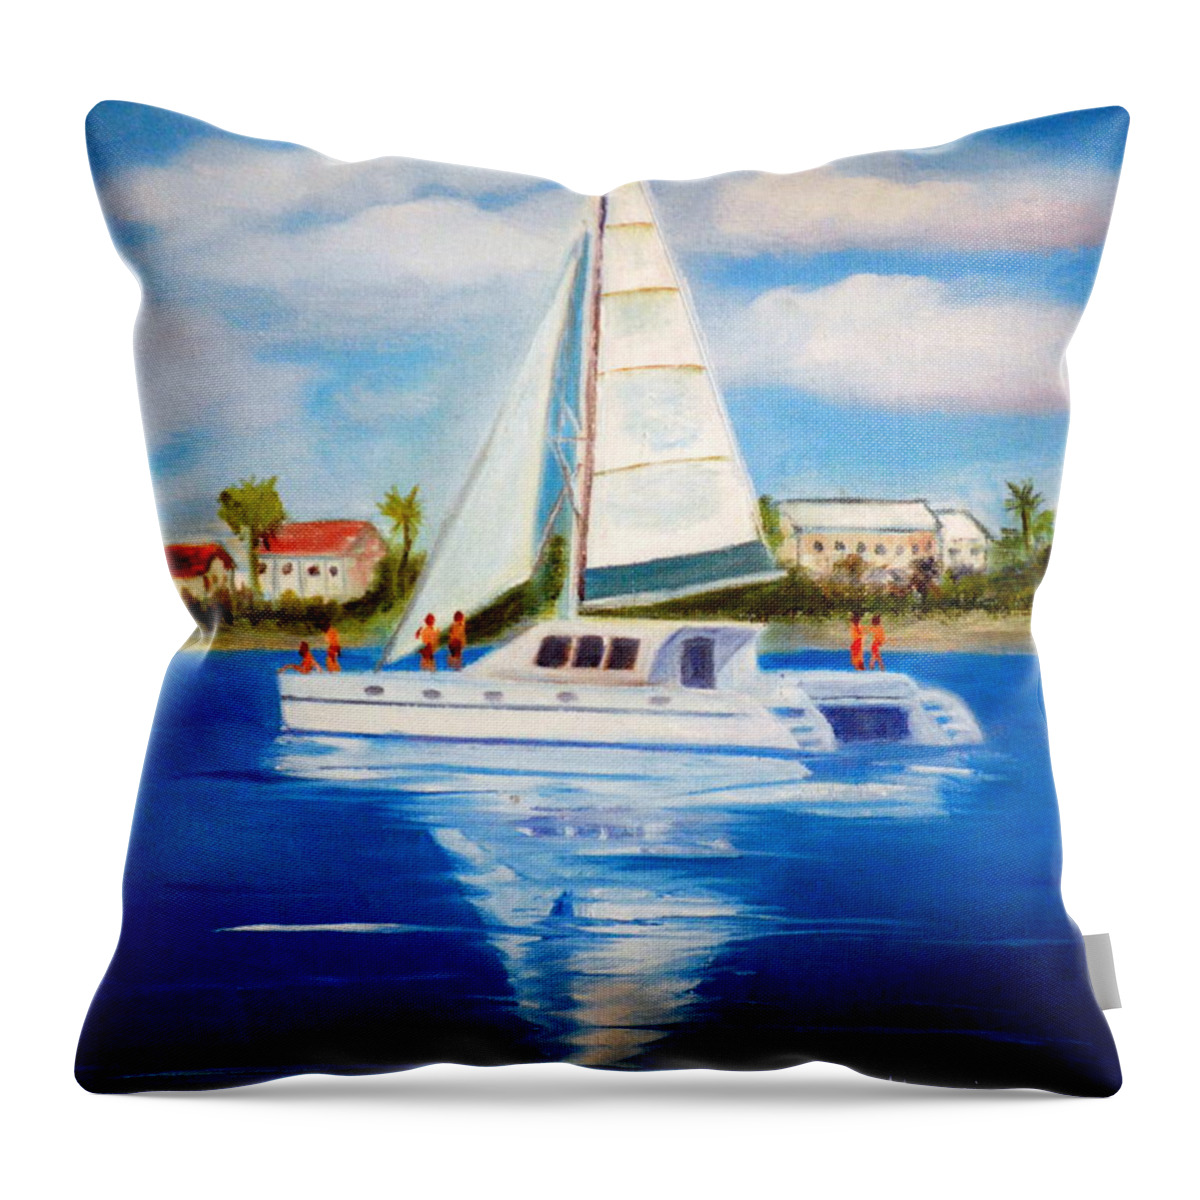 Sailing Throw Pillow featuring the painting Sailing Paradise Island Bahamas by Phil Burton